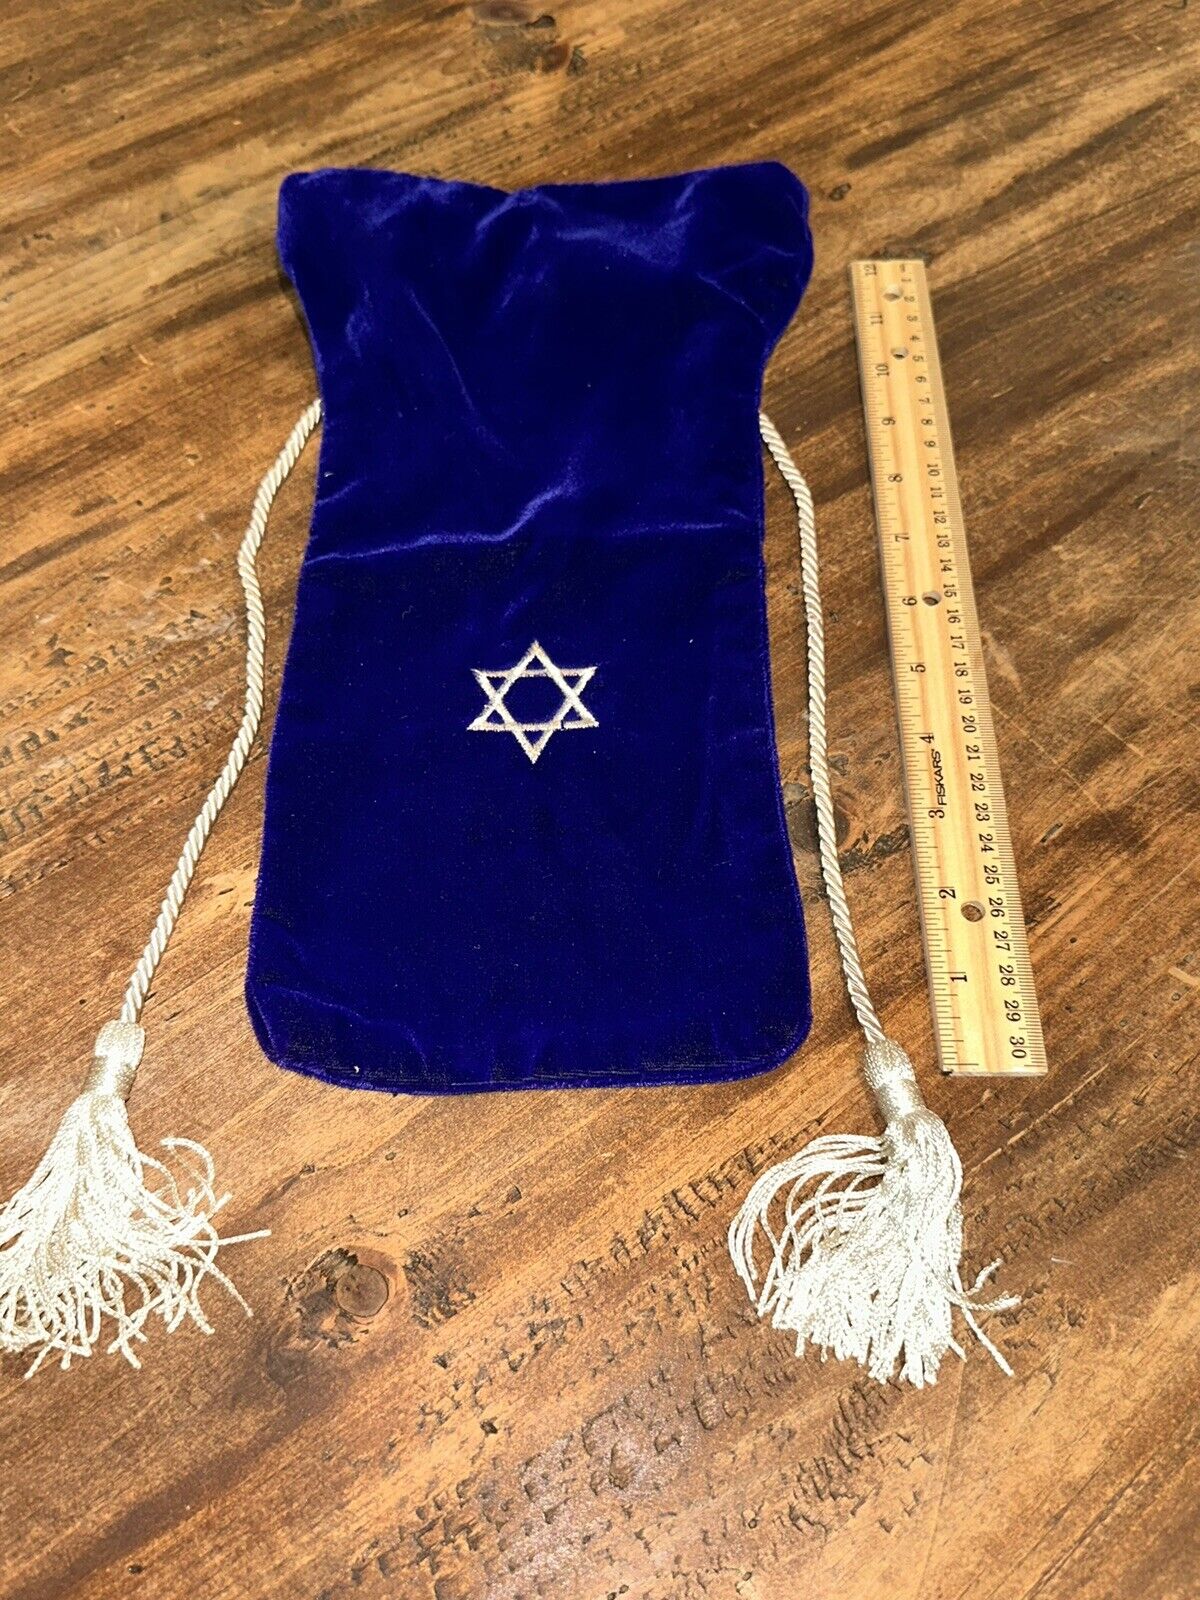 Blue Velvet Bag with Star of David - Jewish Judaica